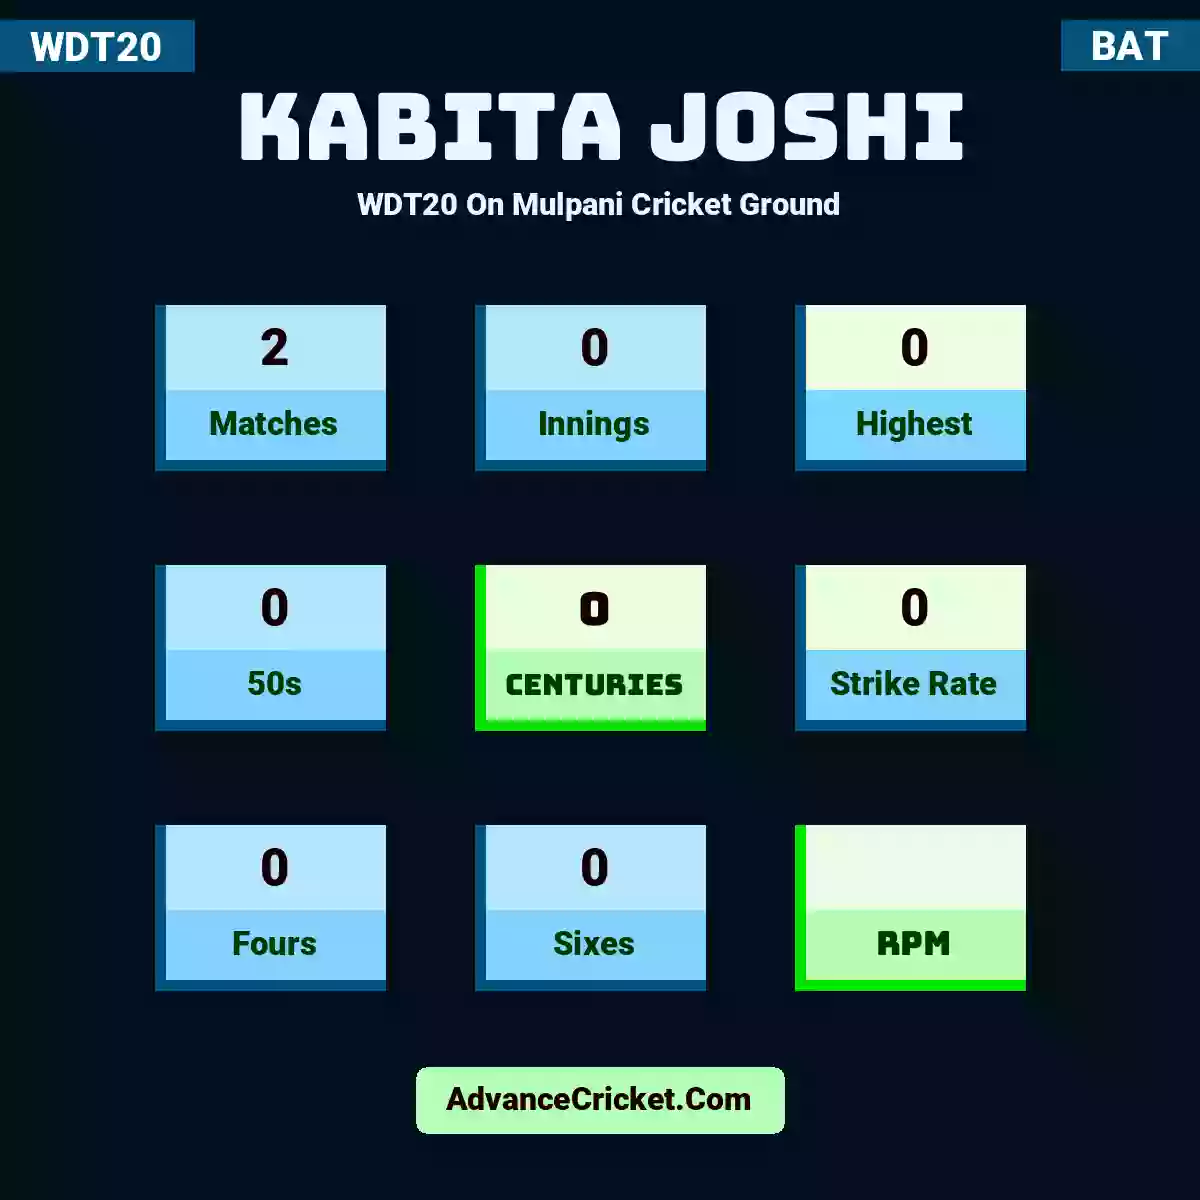 Kabita Joshi WDT20  On Mulpani Cricket Ground, Kabita Joshi played 2 matches, scored 0 runs as highest, 0 half-centuries, and 0 centuries, with a strike rate of 0. K.Joshi hit 0 fours and 0 sixes.